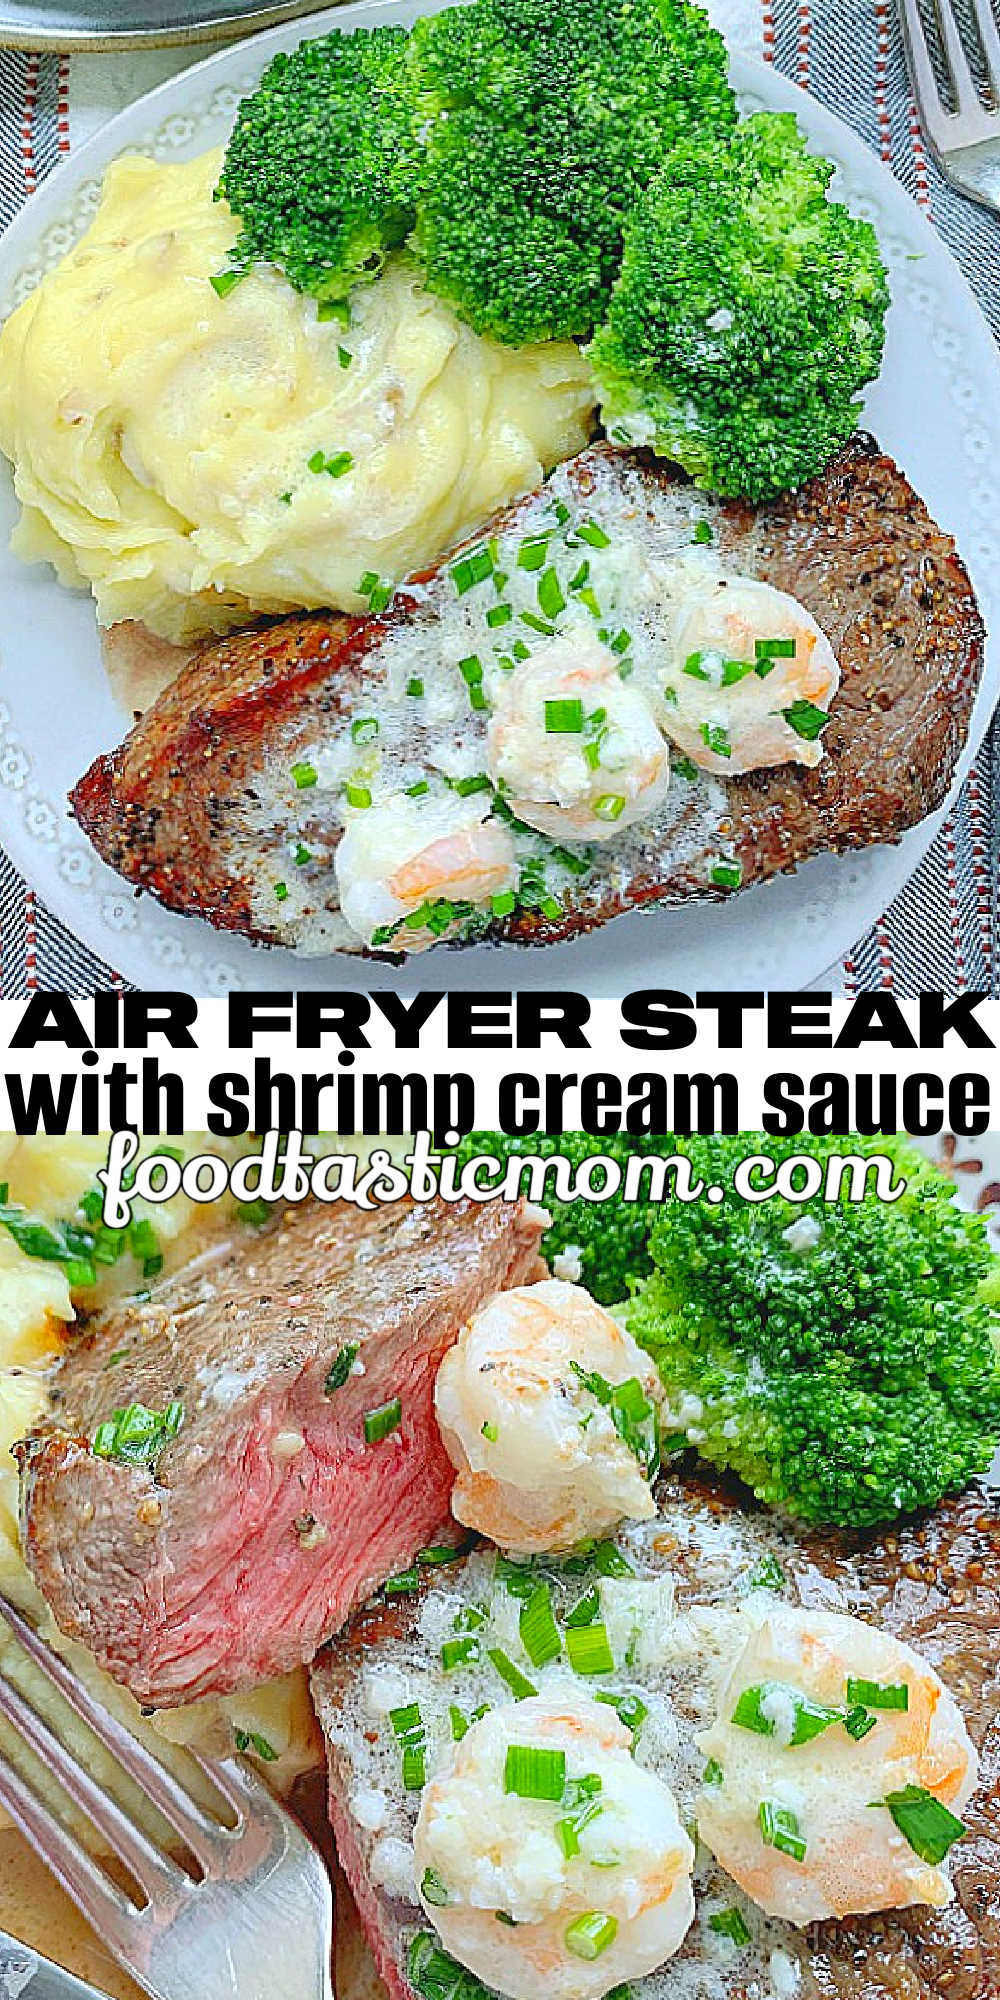 Air Fryer Steak with Shrimp Cream Sauce | Foodtastic Mom #ad #ohbeef #airfryersteak #steakrecipes #datenightdinnerrecipes #valentinesday via @foodtasticmom